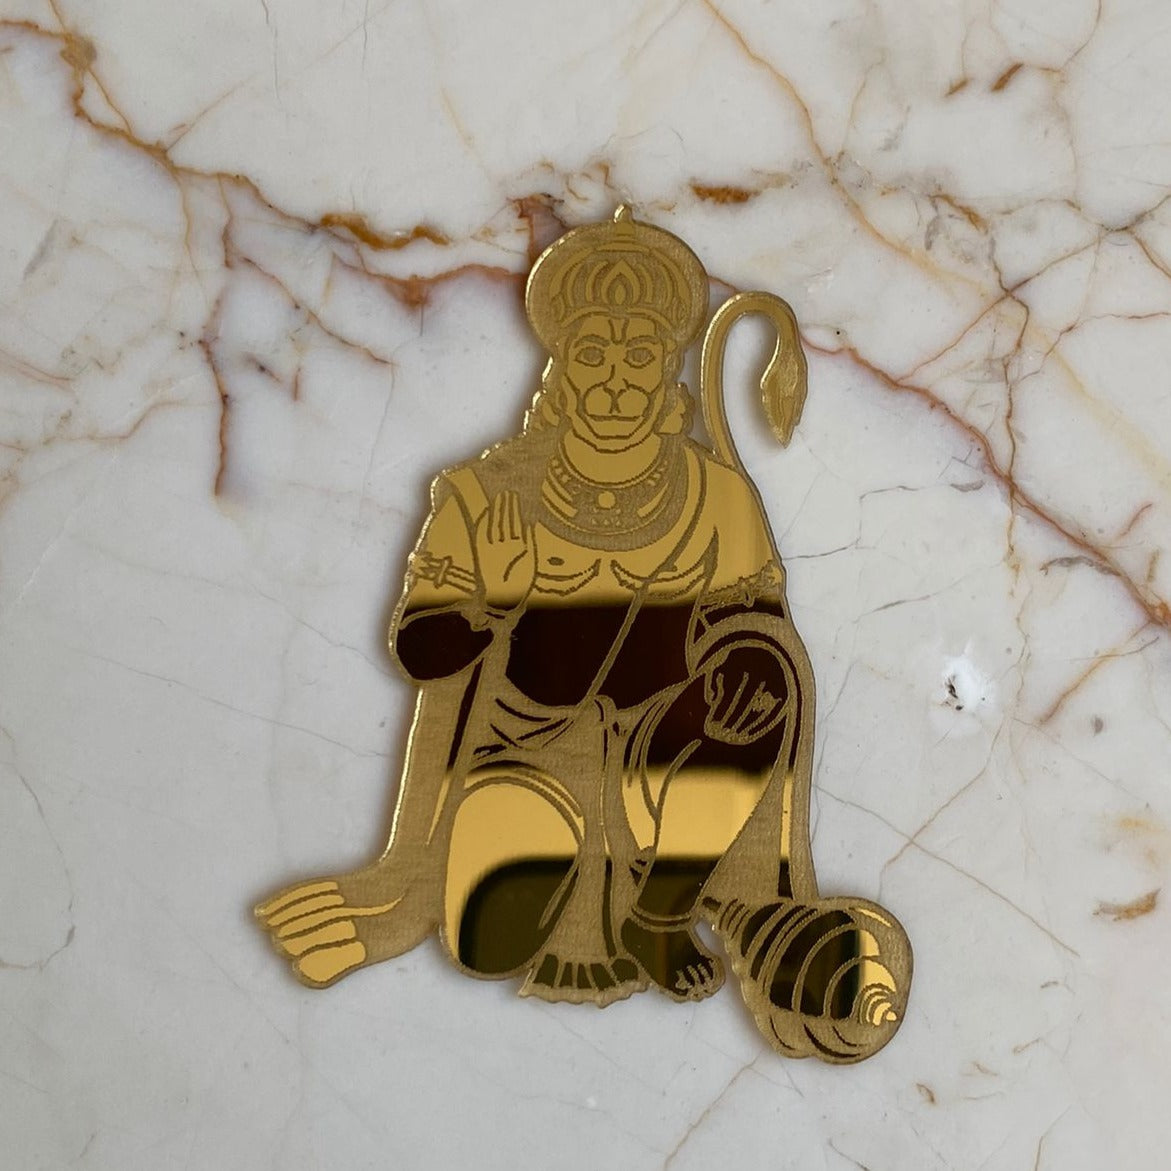 Hanuman ji symbol / logo